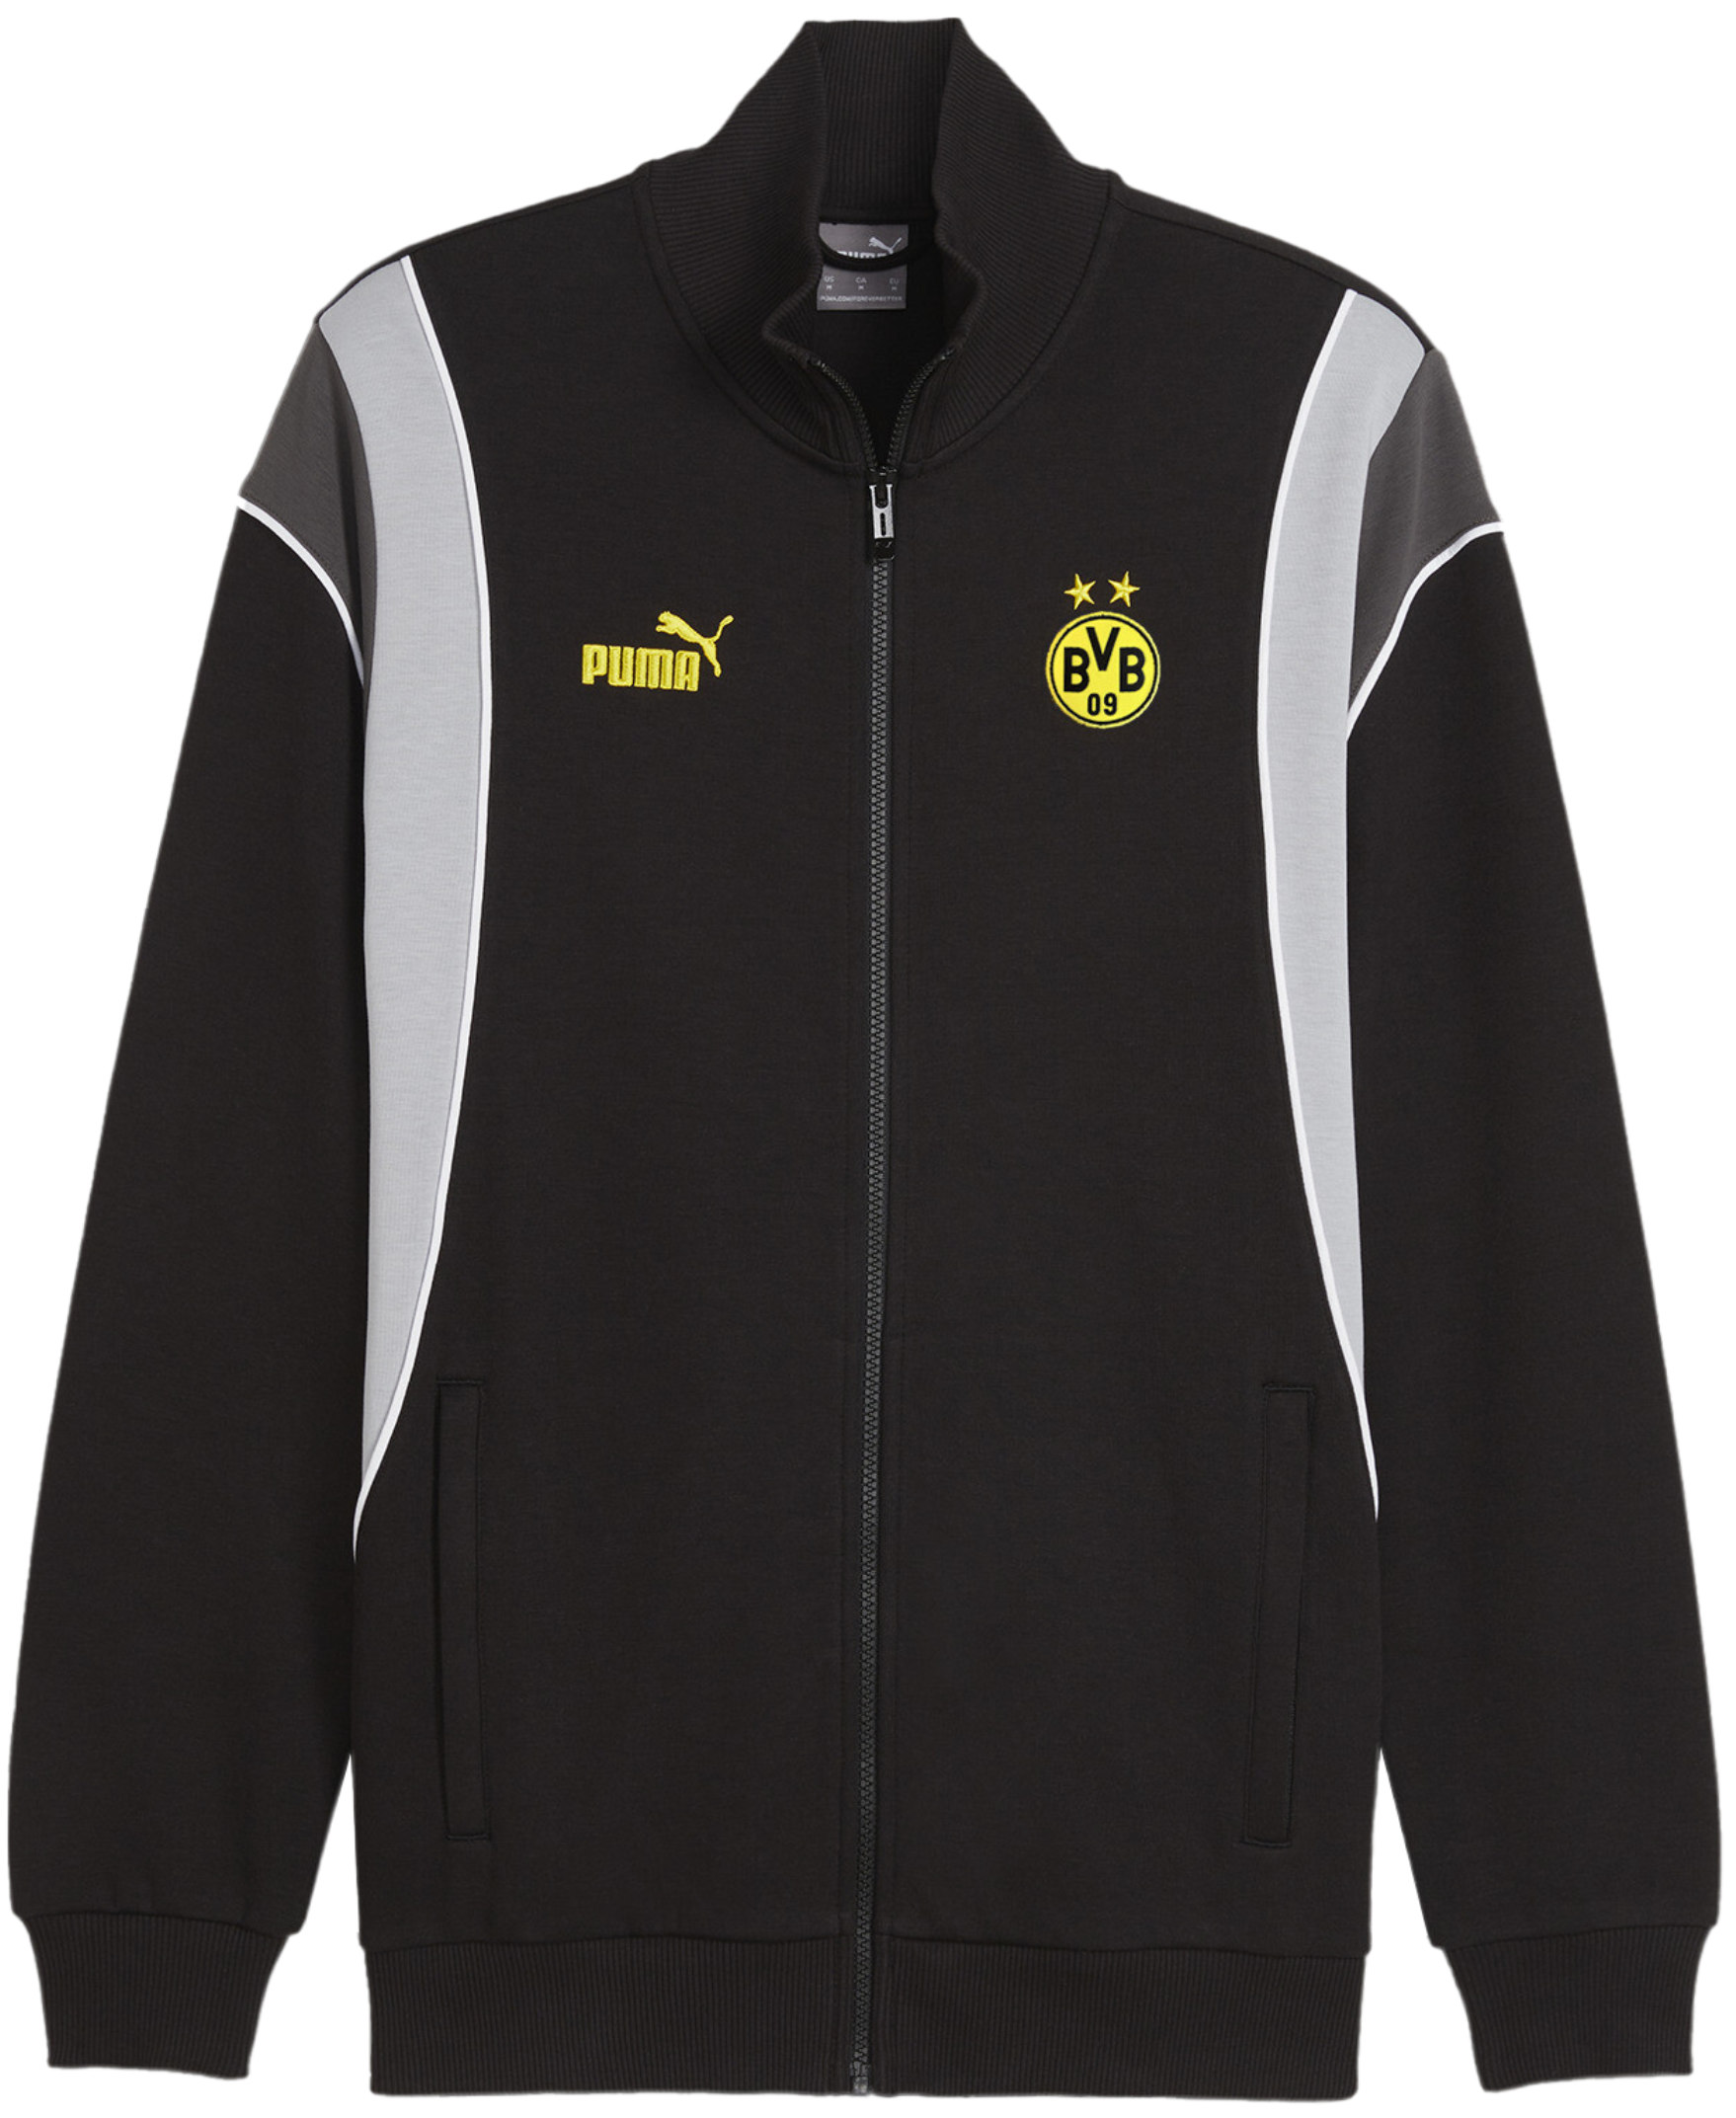 Jakke Puma BVB Dortmund Ftbl Archive Trainings jacket